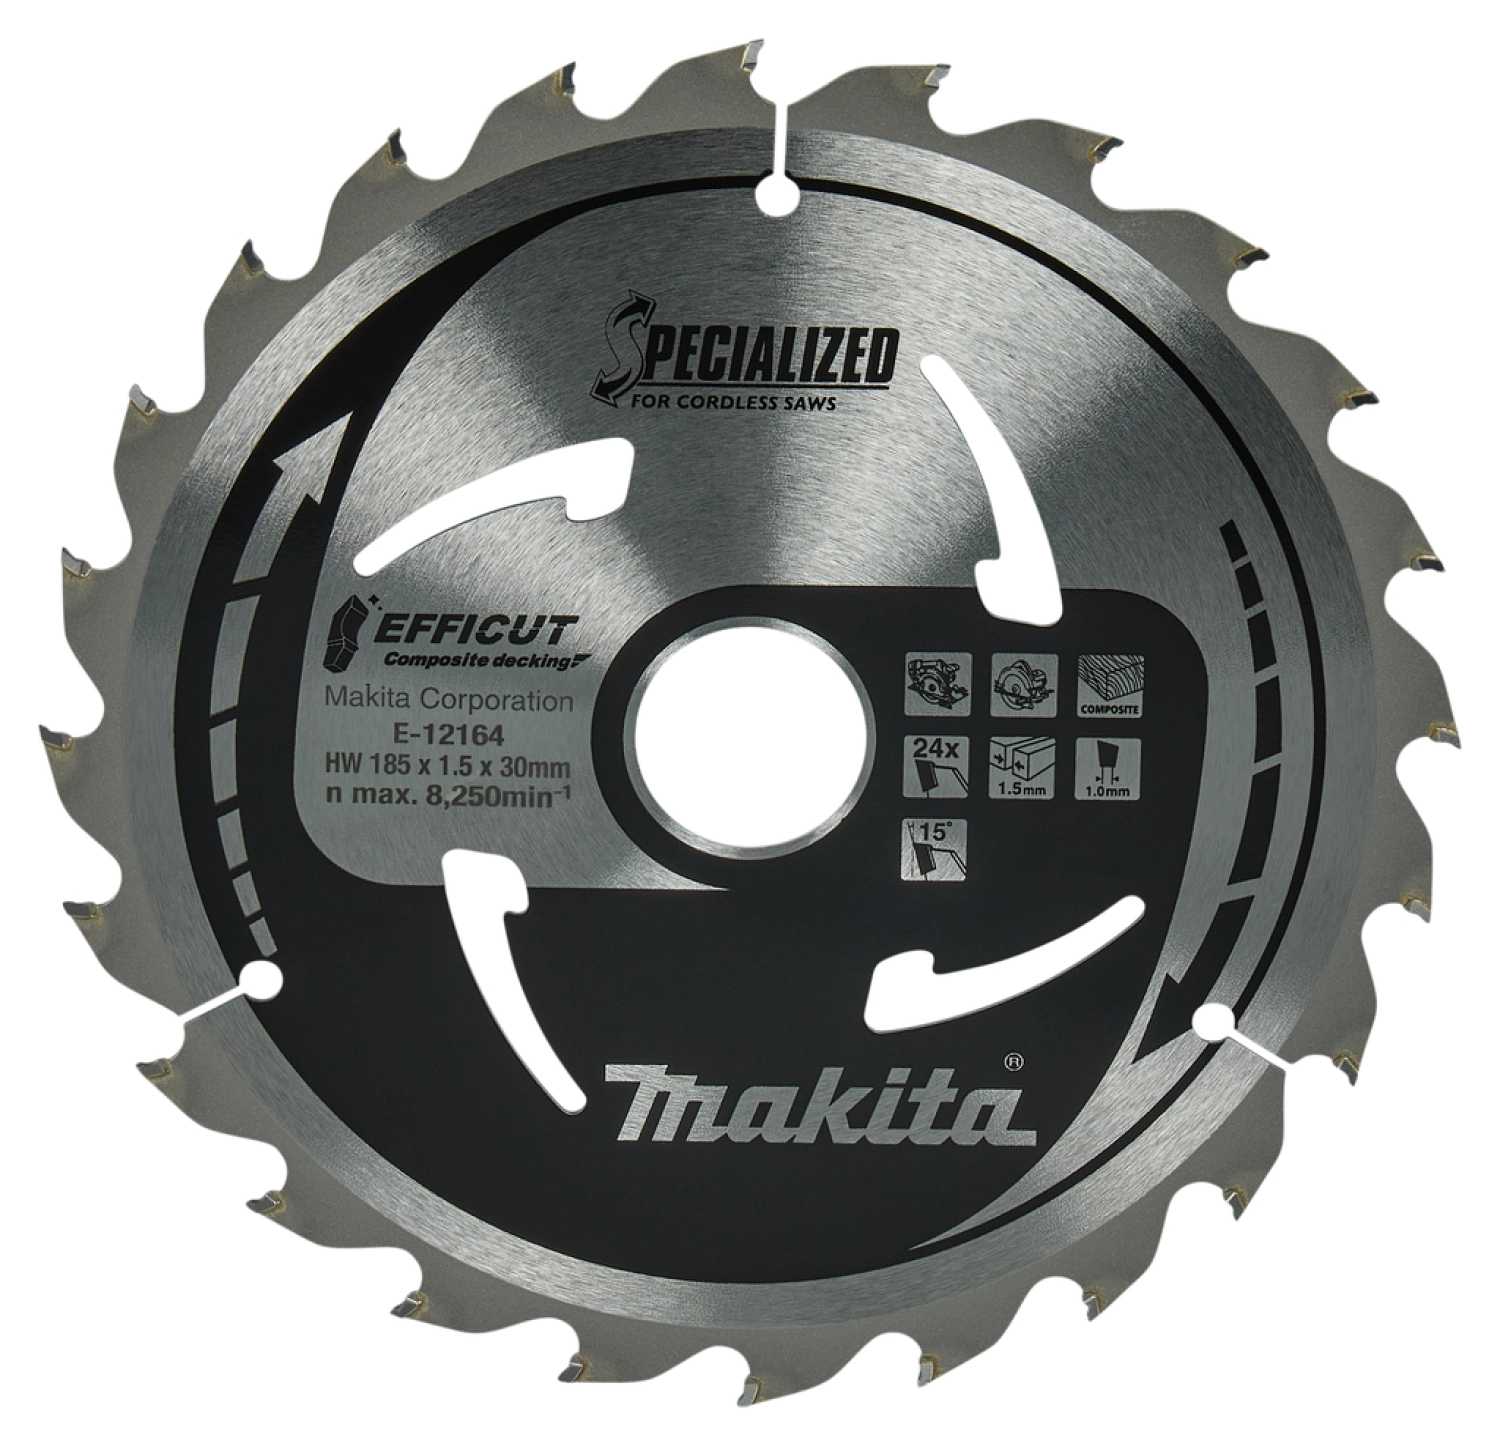 Makita E-12164 Efficut Lame de scie circulaire WPC - 185x30x1,5mm 24T